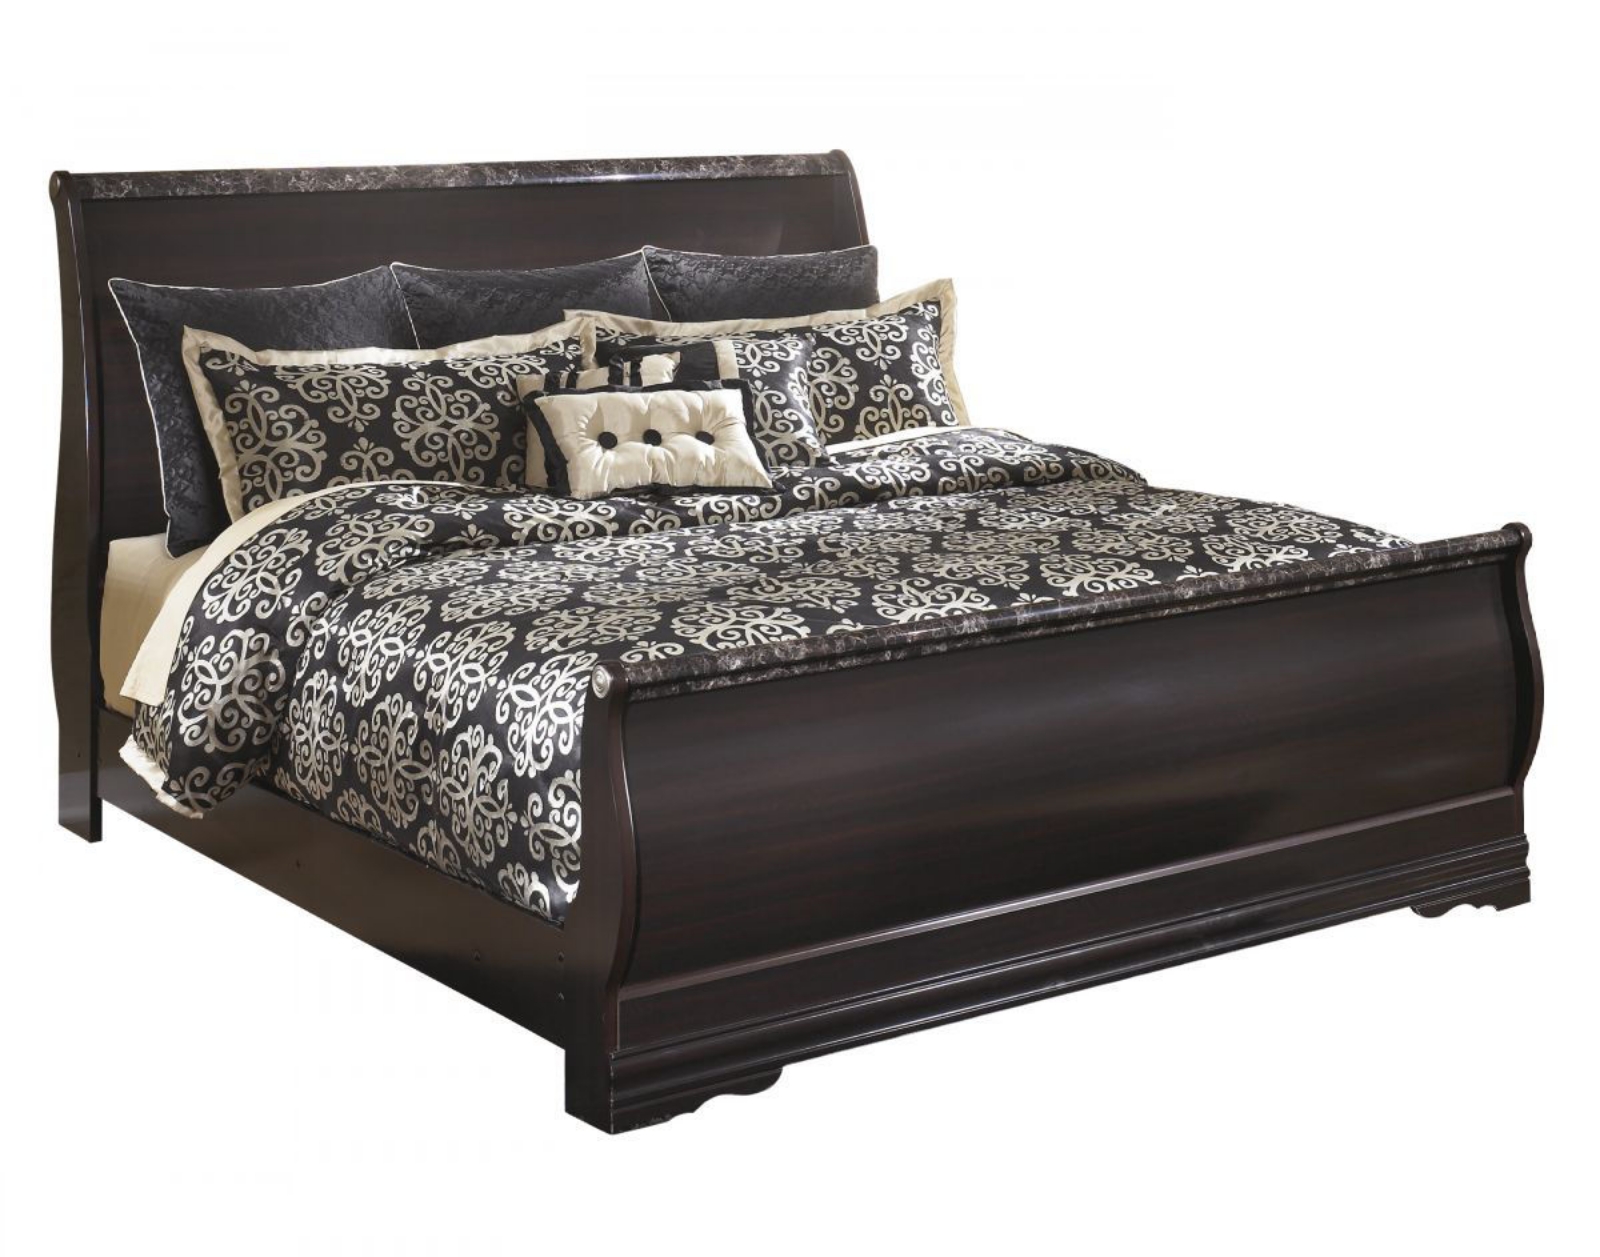 Picture of Esmarelda King Size Bed